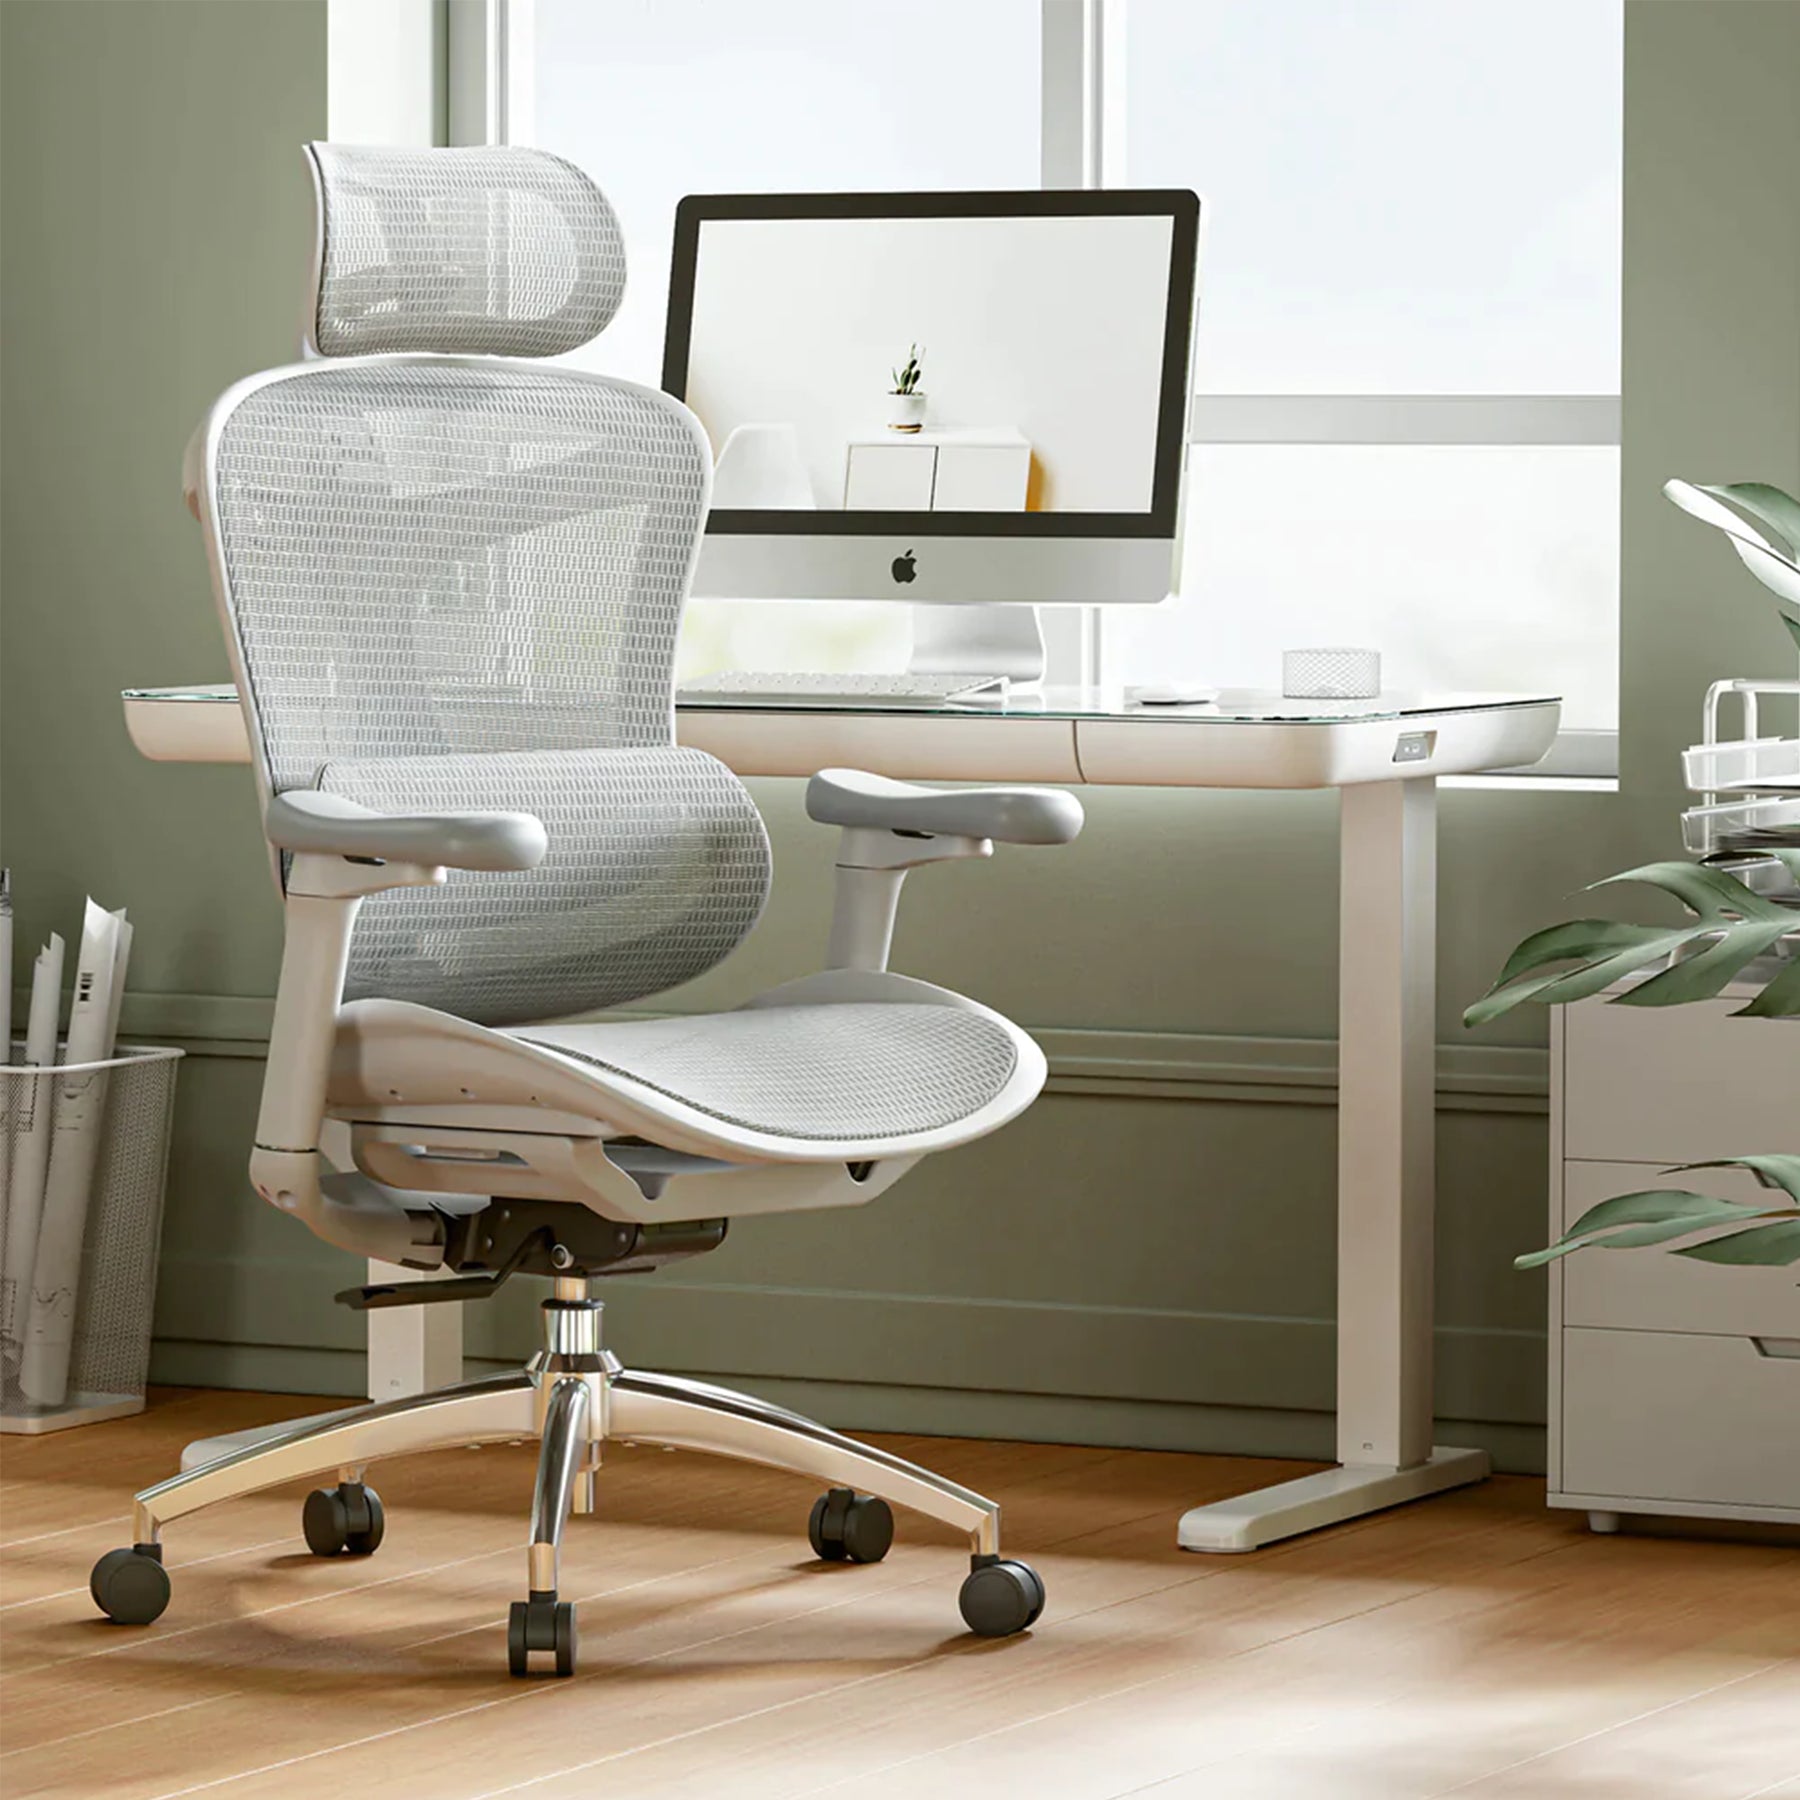 Pre Sale - Sihoo Doro C300 Ergonomic Office Chair